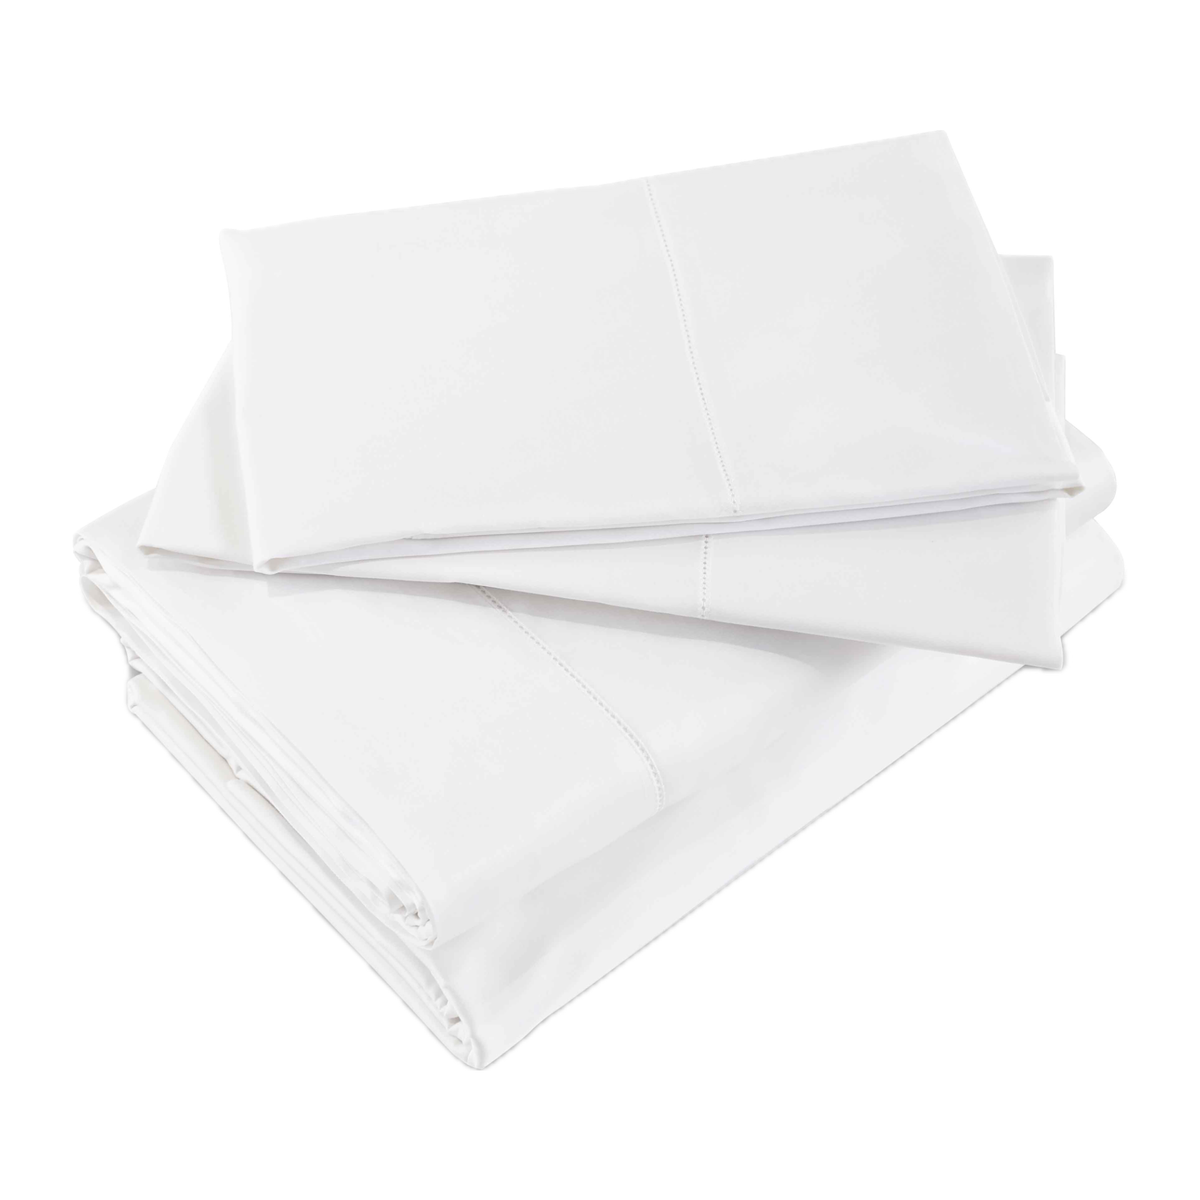 Sheet Set Silog of Signoria Nuvola Bedding in White Color